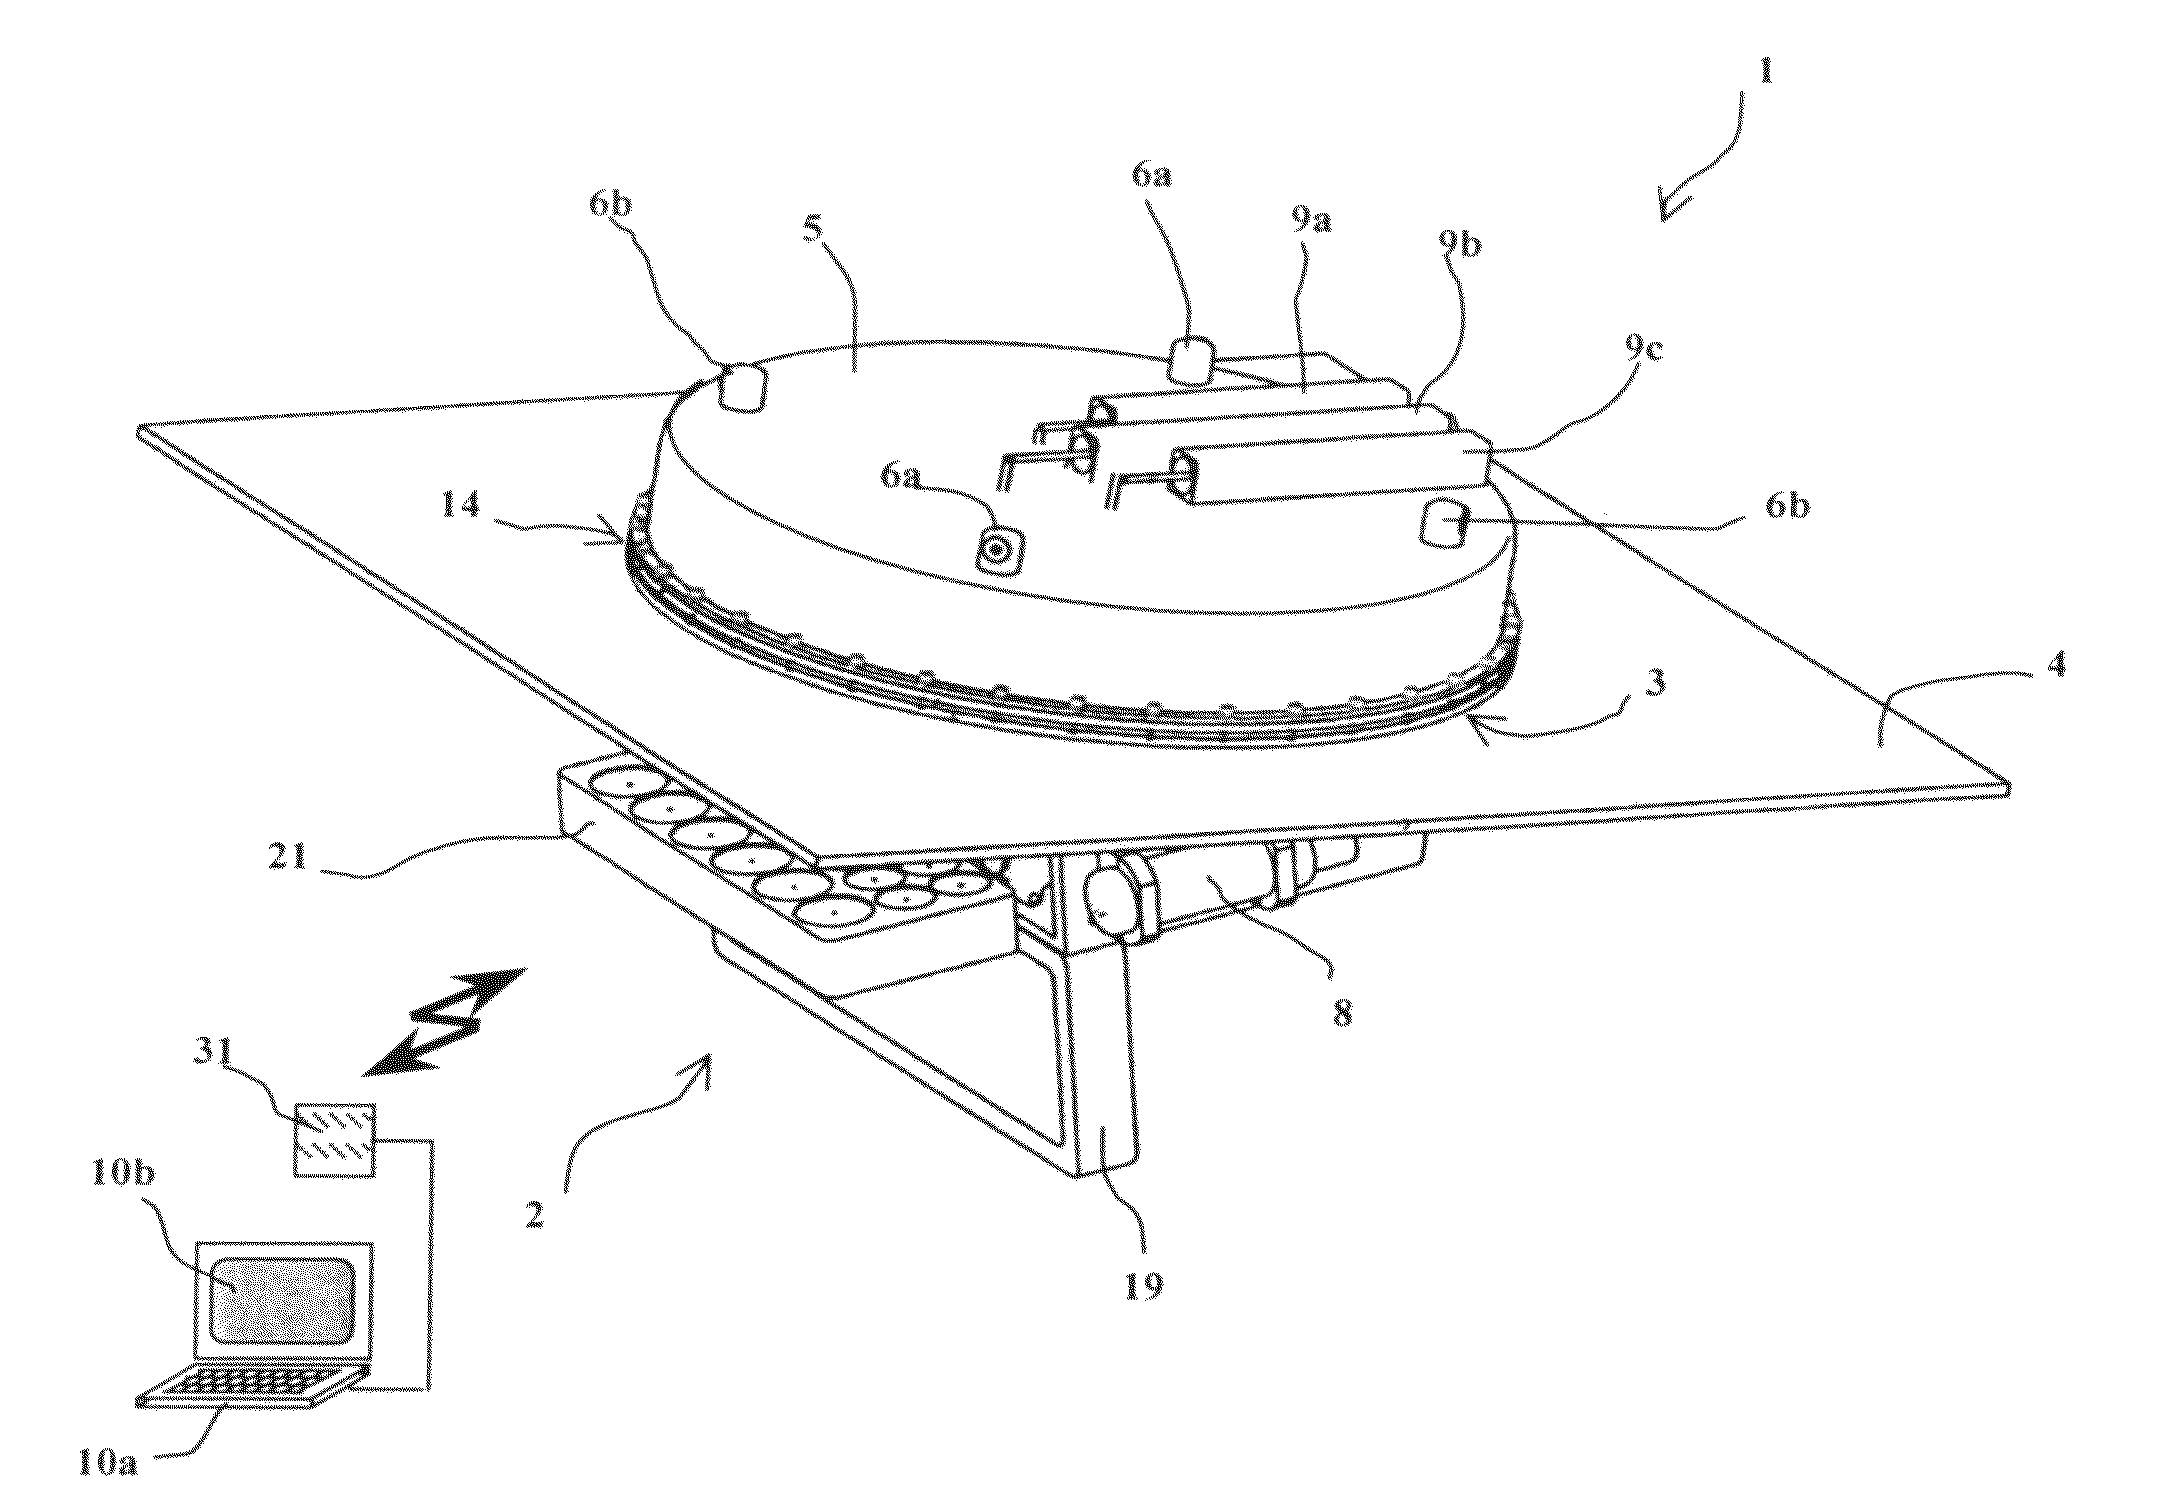 Retractable light turret